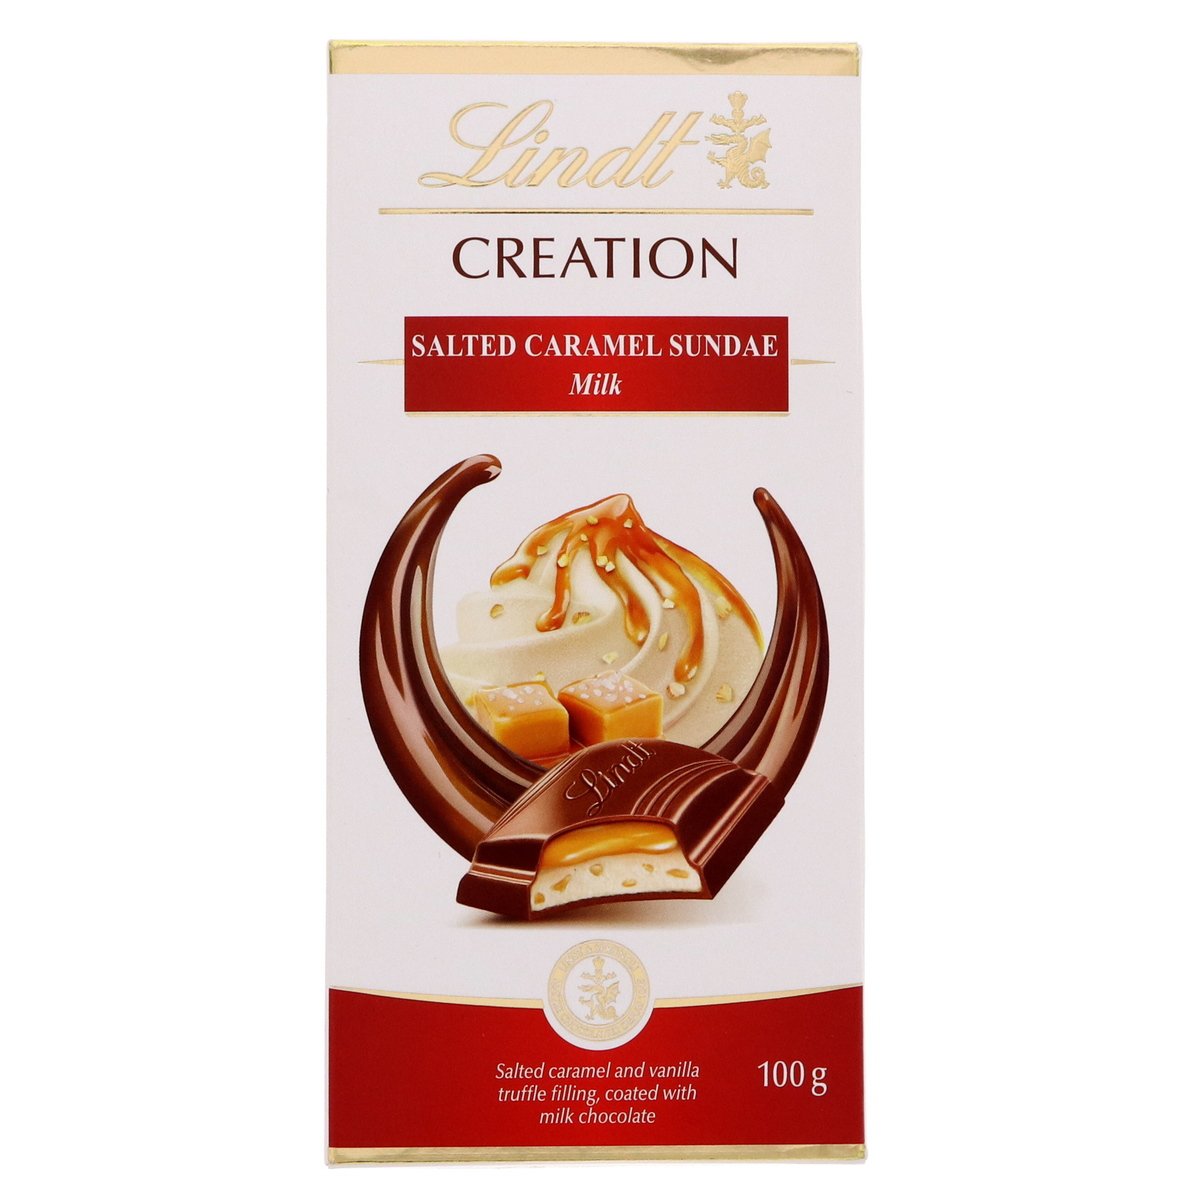 Lindt Creation Salted Caramel Sundae Milk Chocolate 100g